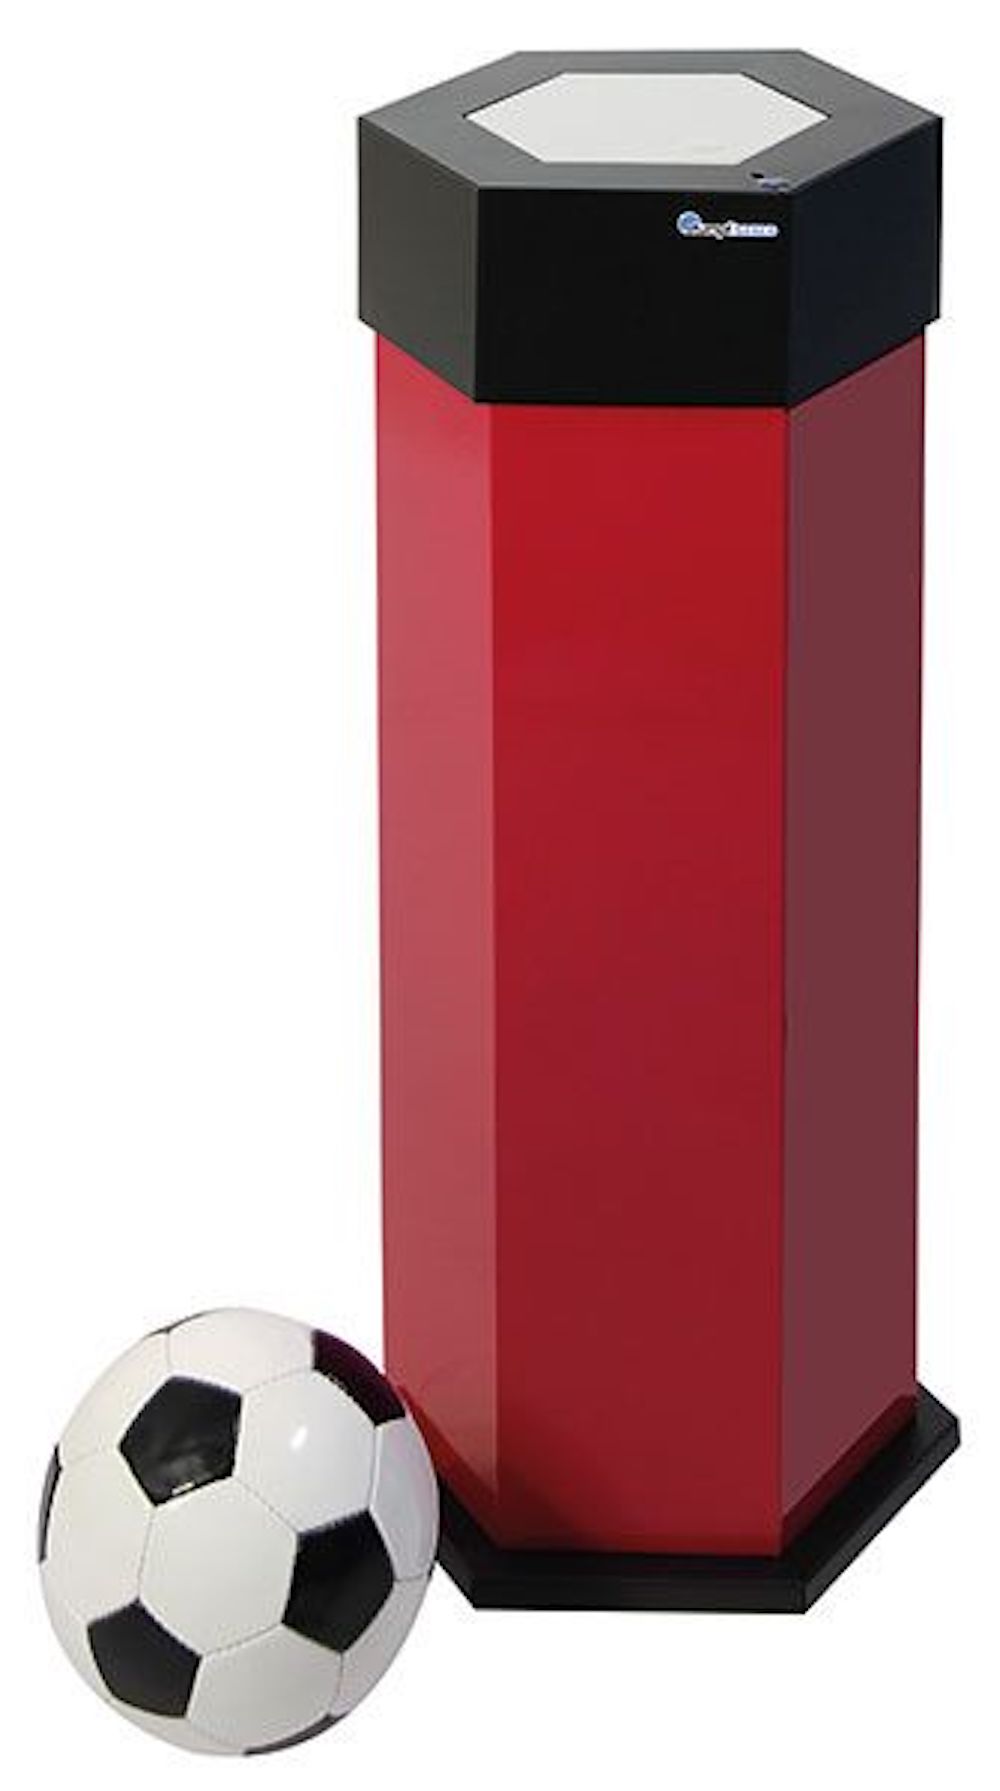 Abfallsammler mit Edelstahl-Einwurfklappe & Touchless-Öffnungsautomatik | 45 Liter, HxBxT 83x33x38cm | inkl. Ladegerät | Rubinrot